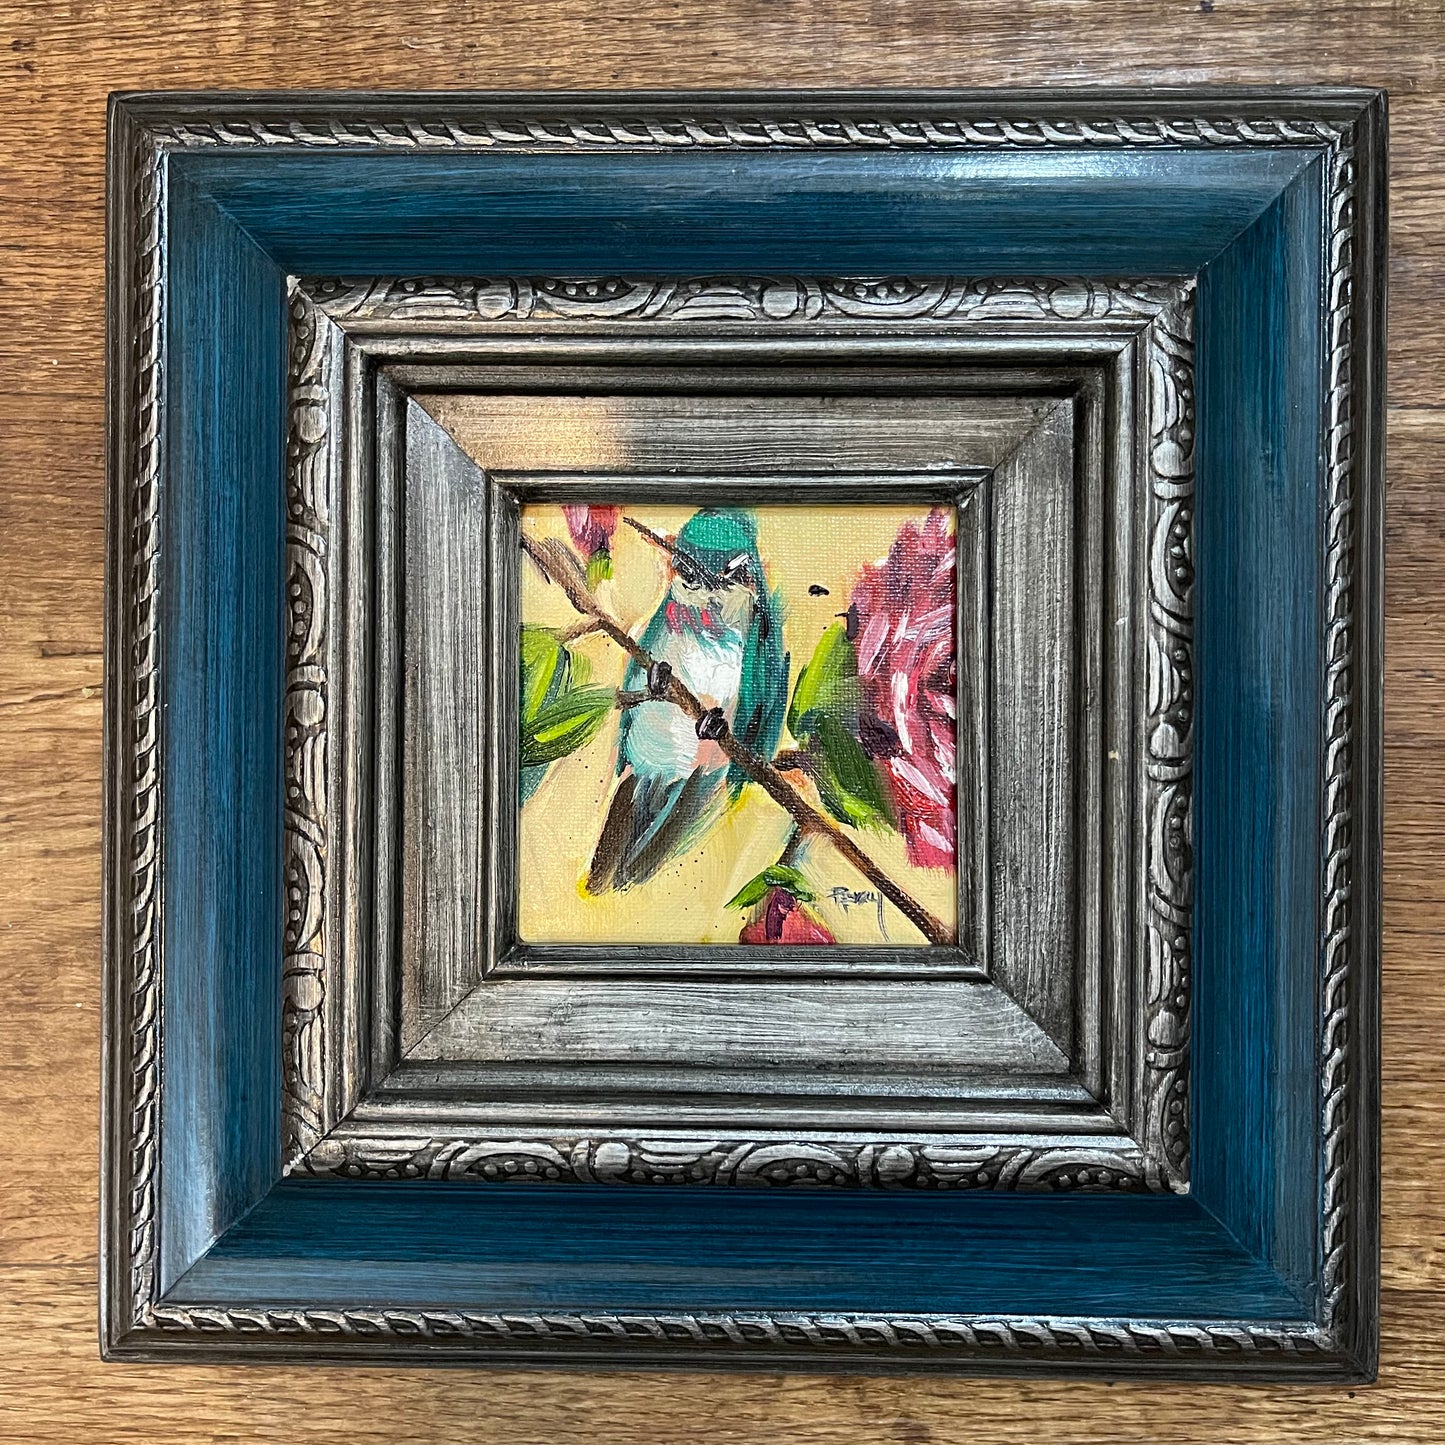 Hummingbird on a Rose Bush Original Oil Painting 4x4 Framed